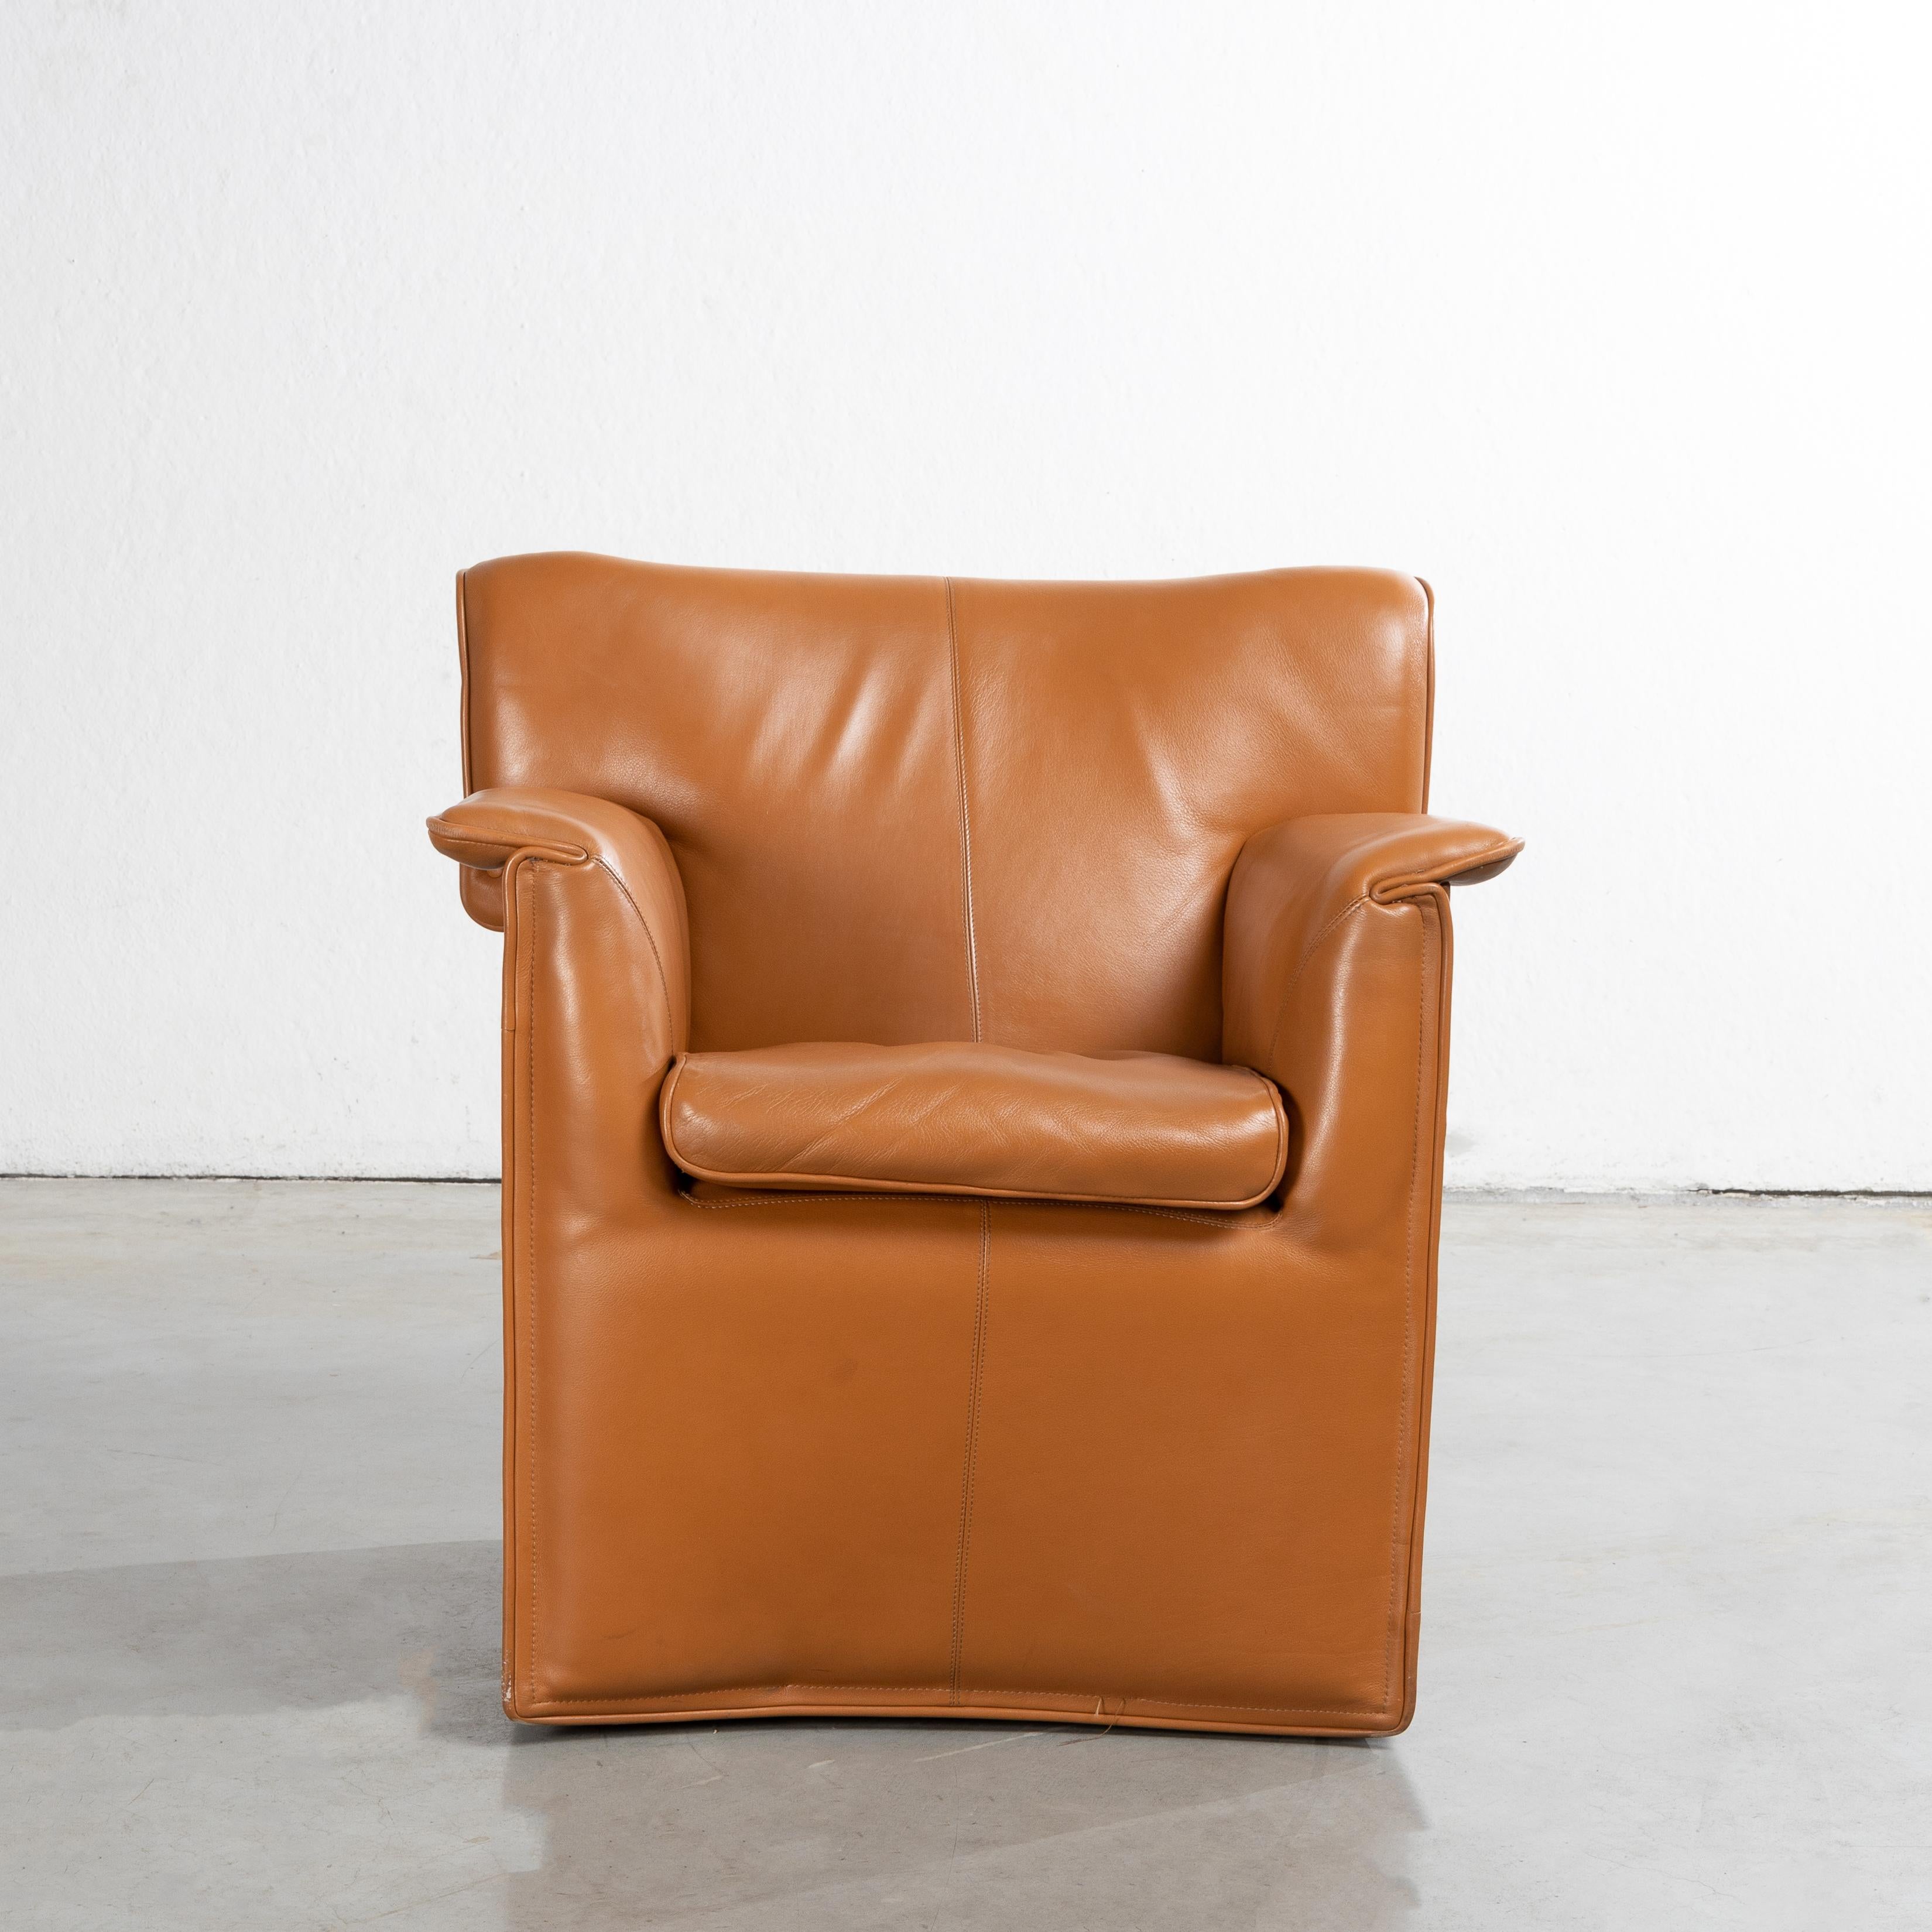 Artona by Afra & Tobia Scarpa – Walnut veneer laminate desk and chair For Sale 9